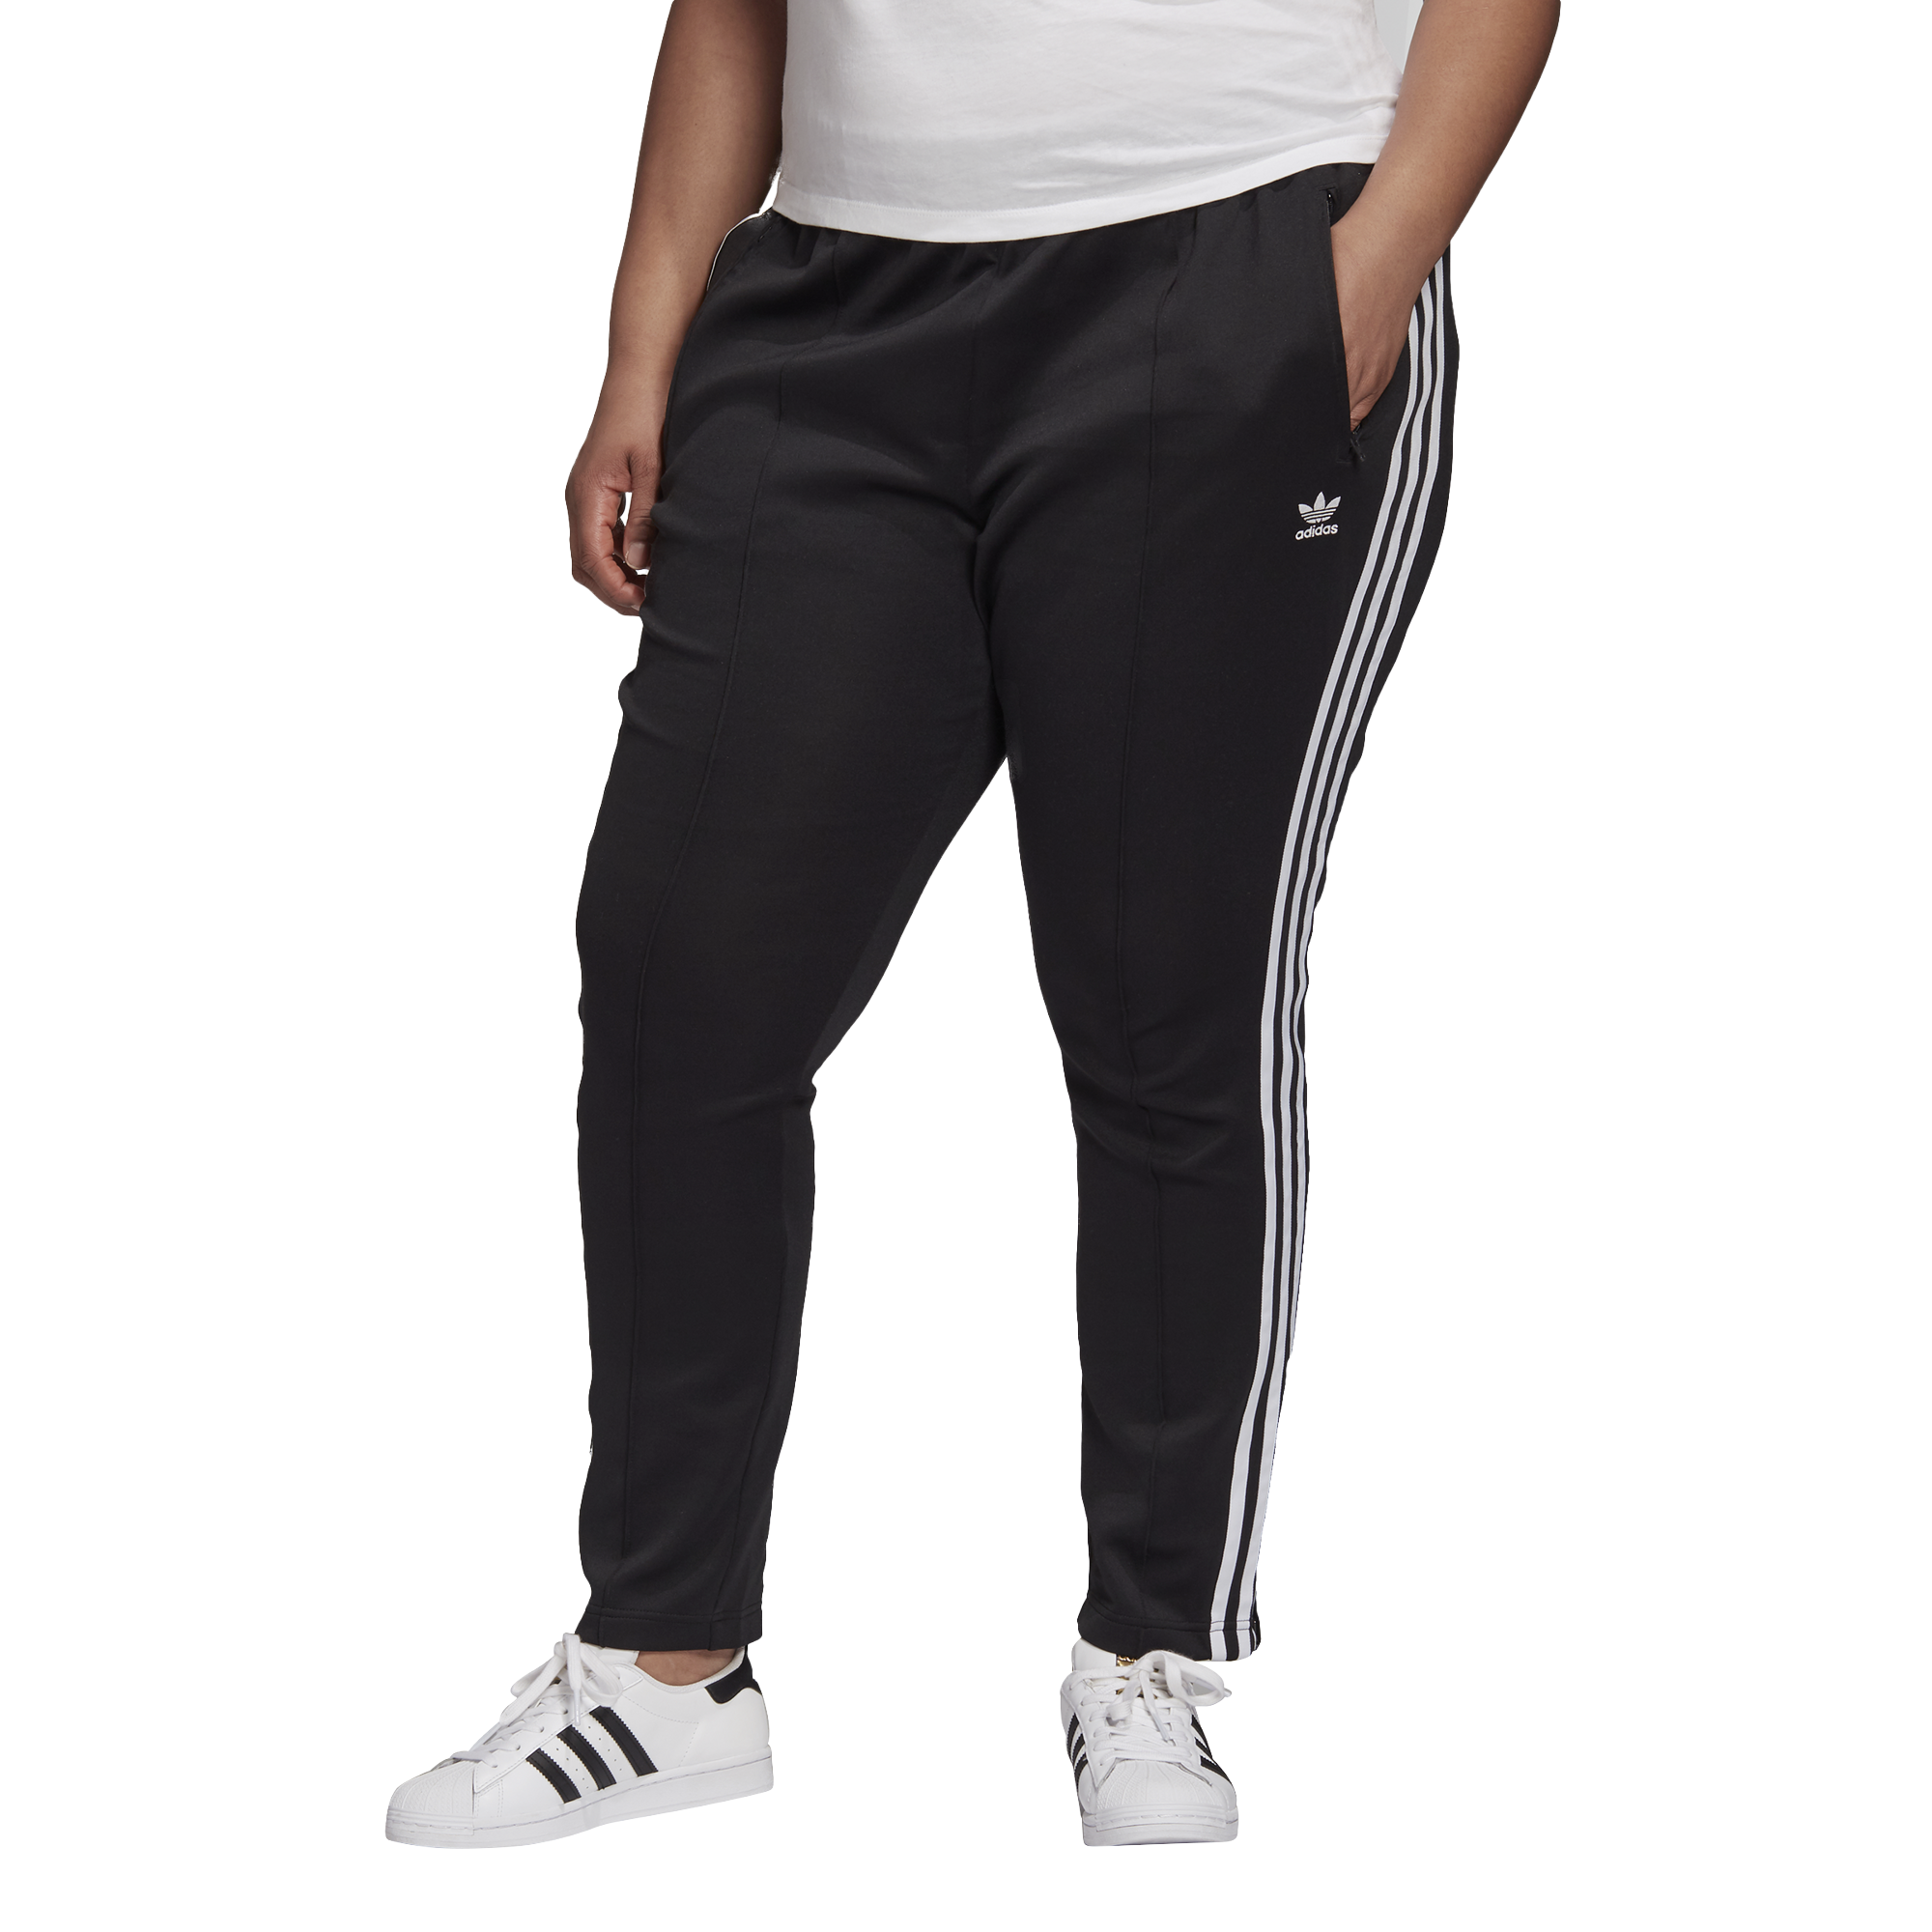 Adidas Originals Women's Primeblue SST Track Pants / Ambient Blush